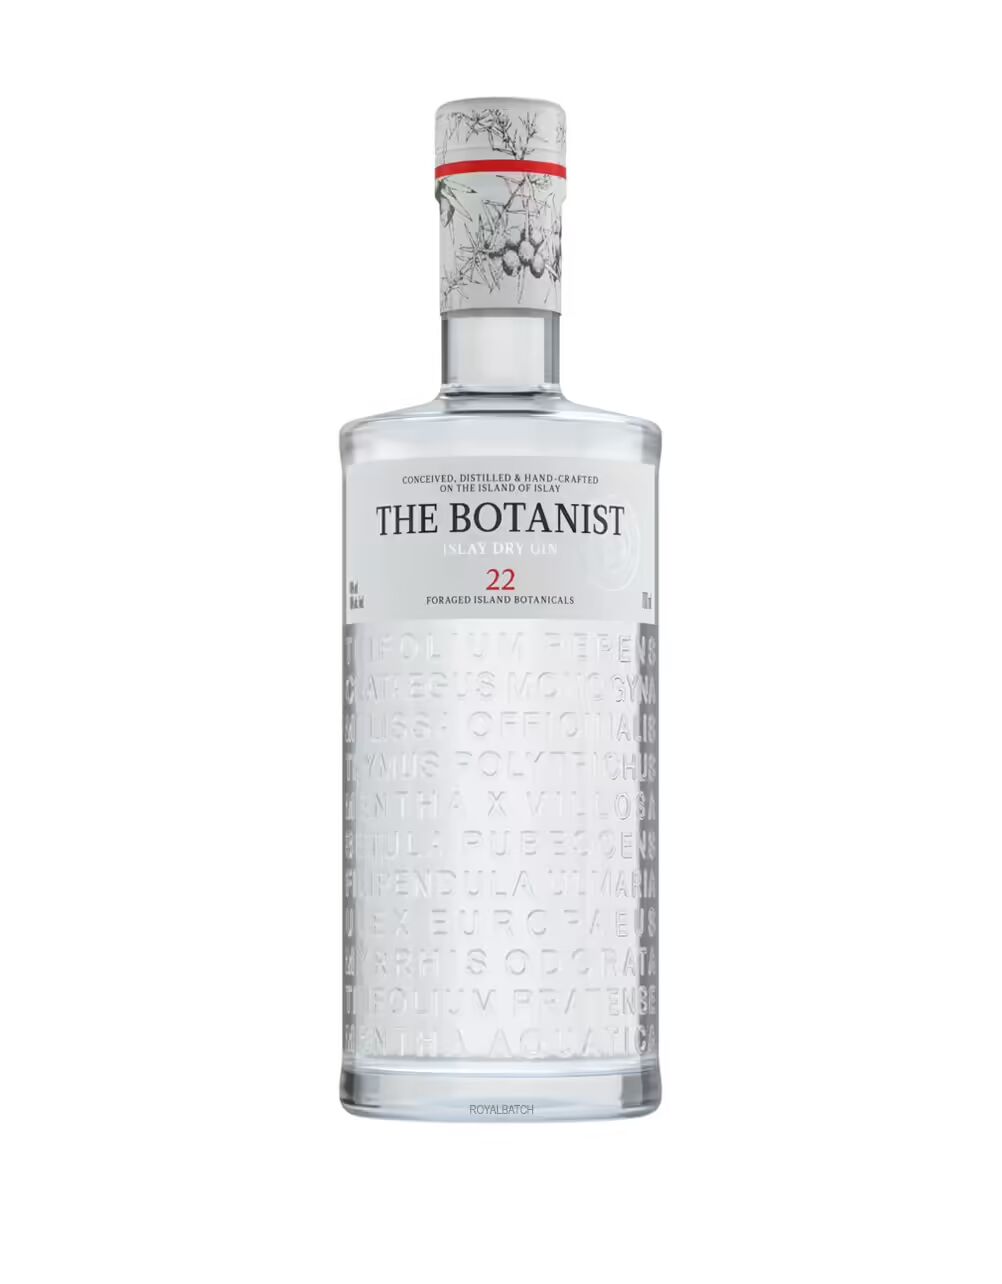 The Botanist Islay Dry Gin 22